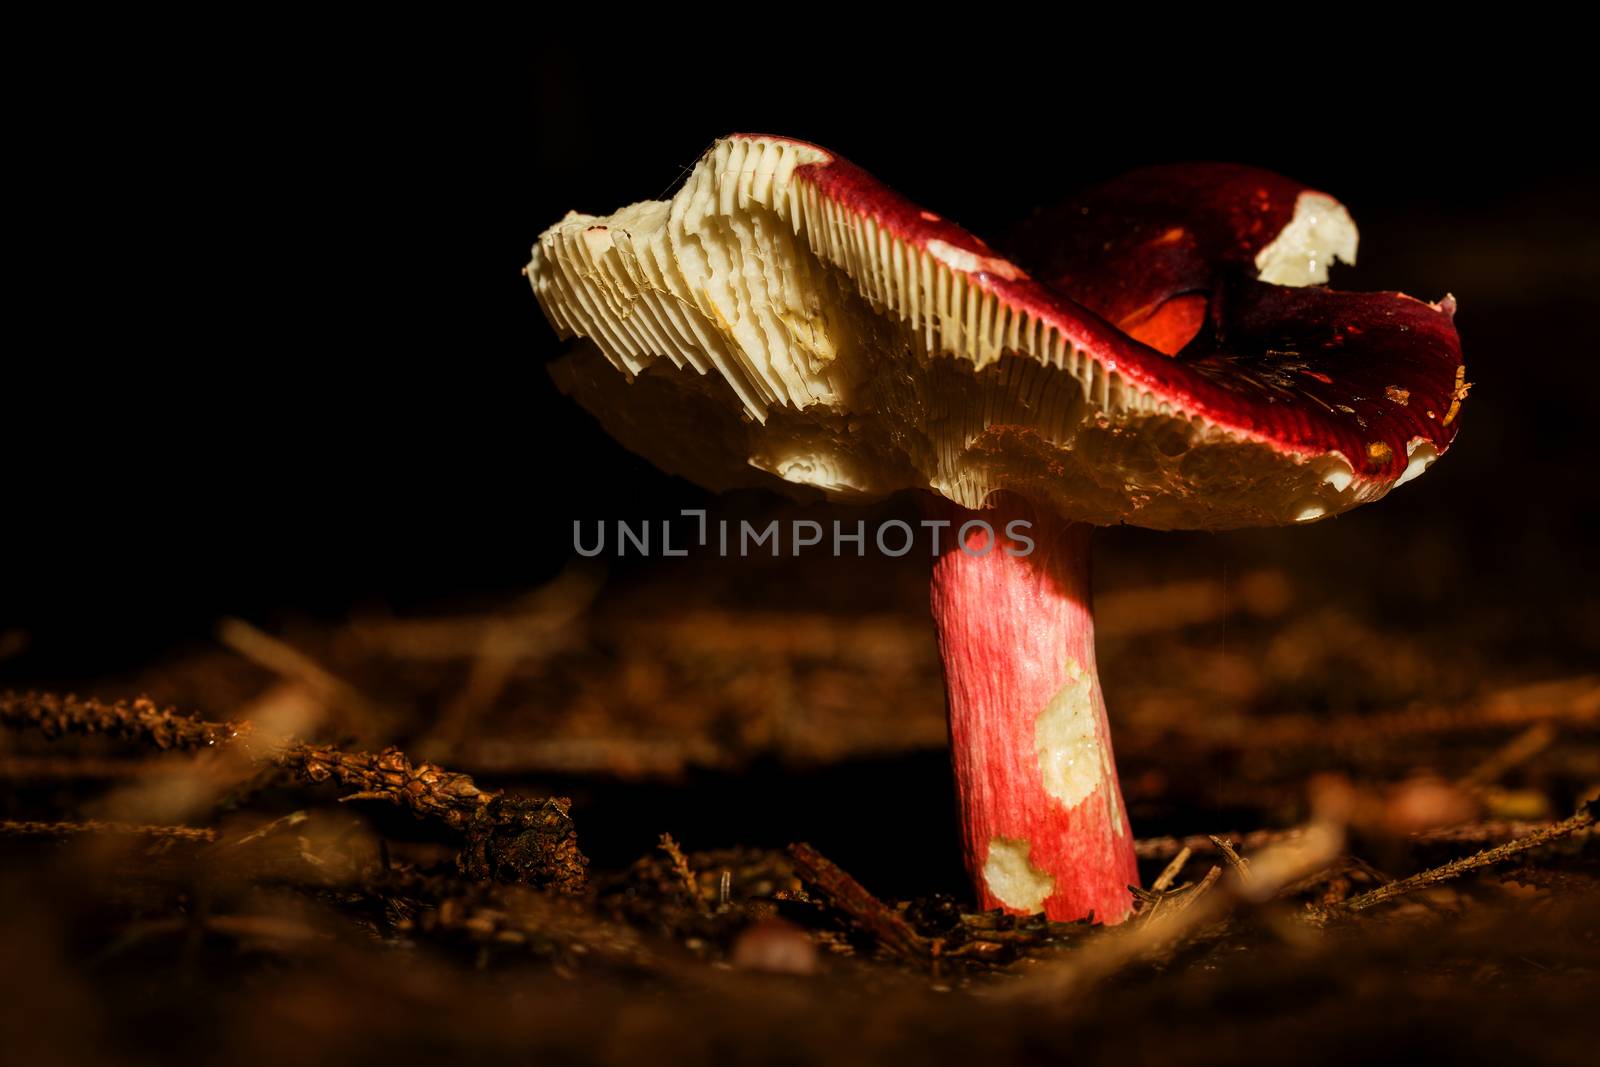 Little red mushroom in the forrest by sandra_fotodesign